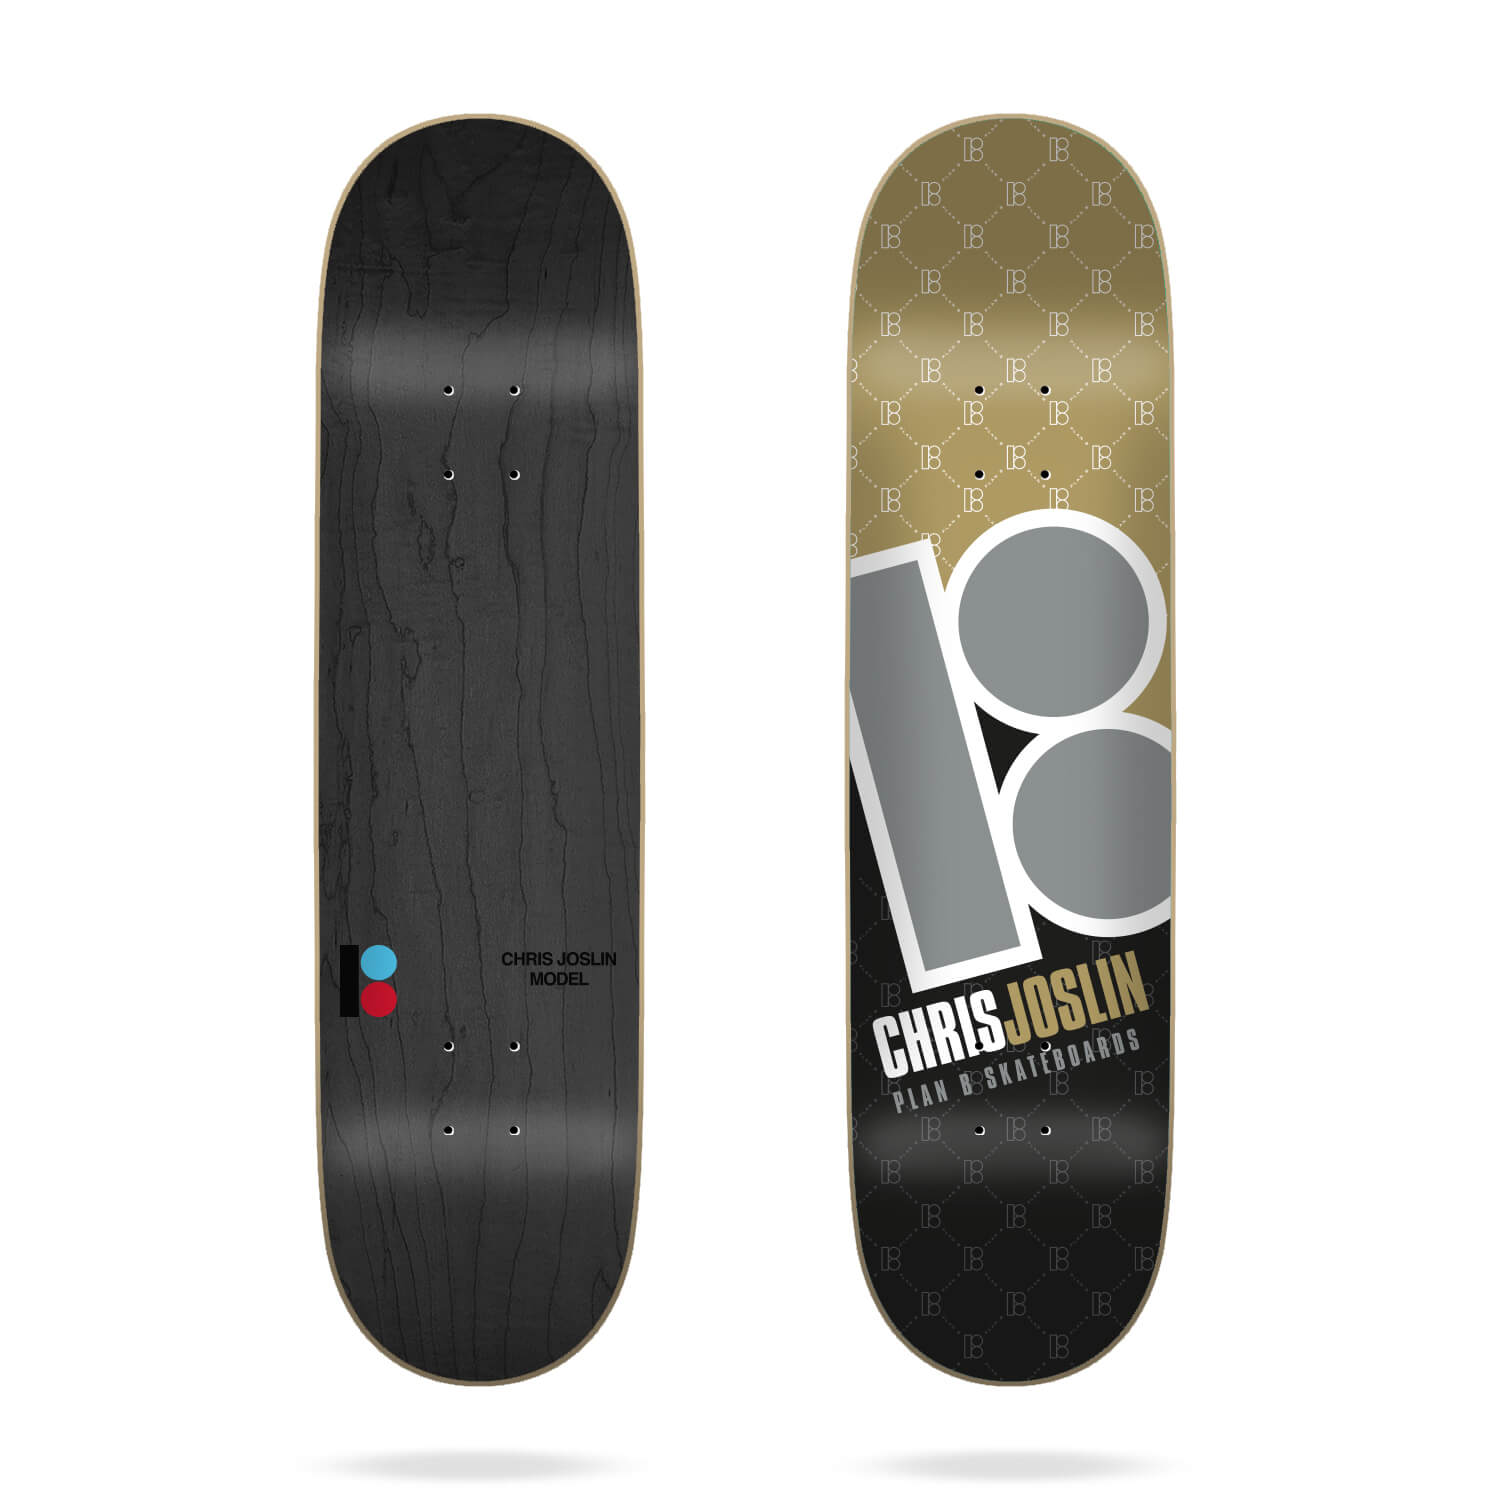 Plan B Skateboard Deck Chris Joslin Corner 8.375" x 32.125" with Grip